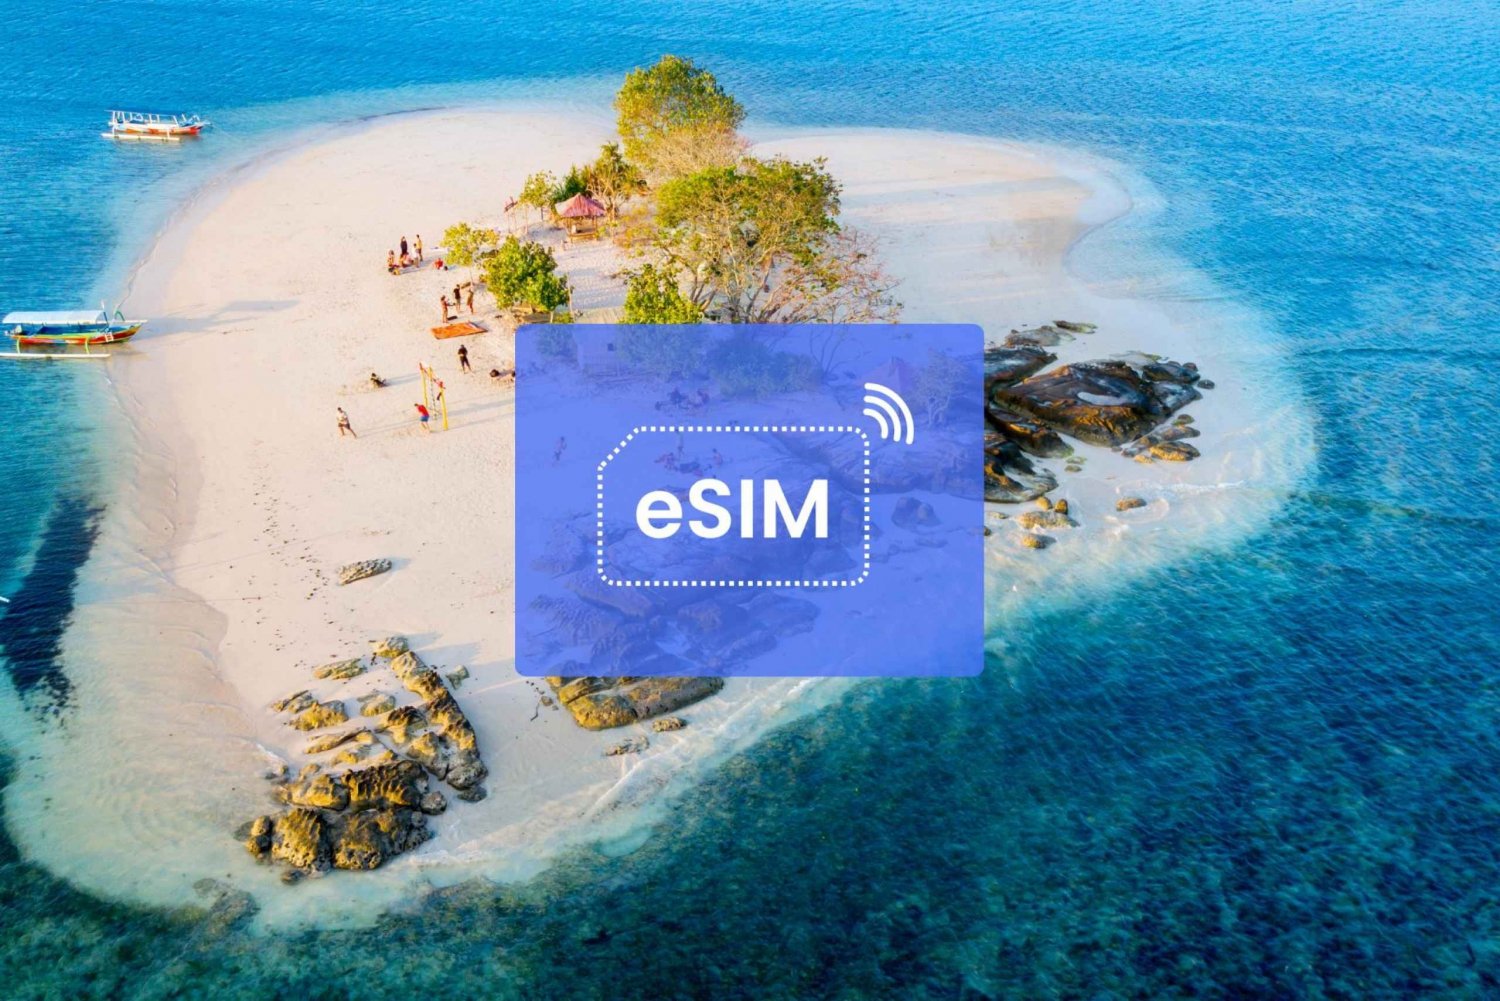 Bali: piano dati mobile roaming eSIM Indonesia